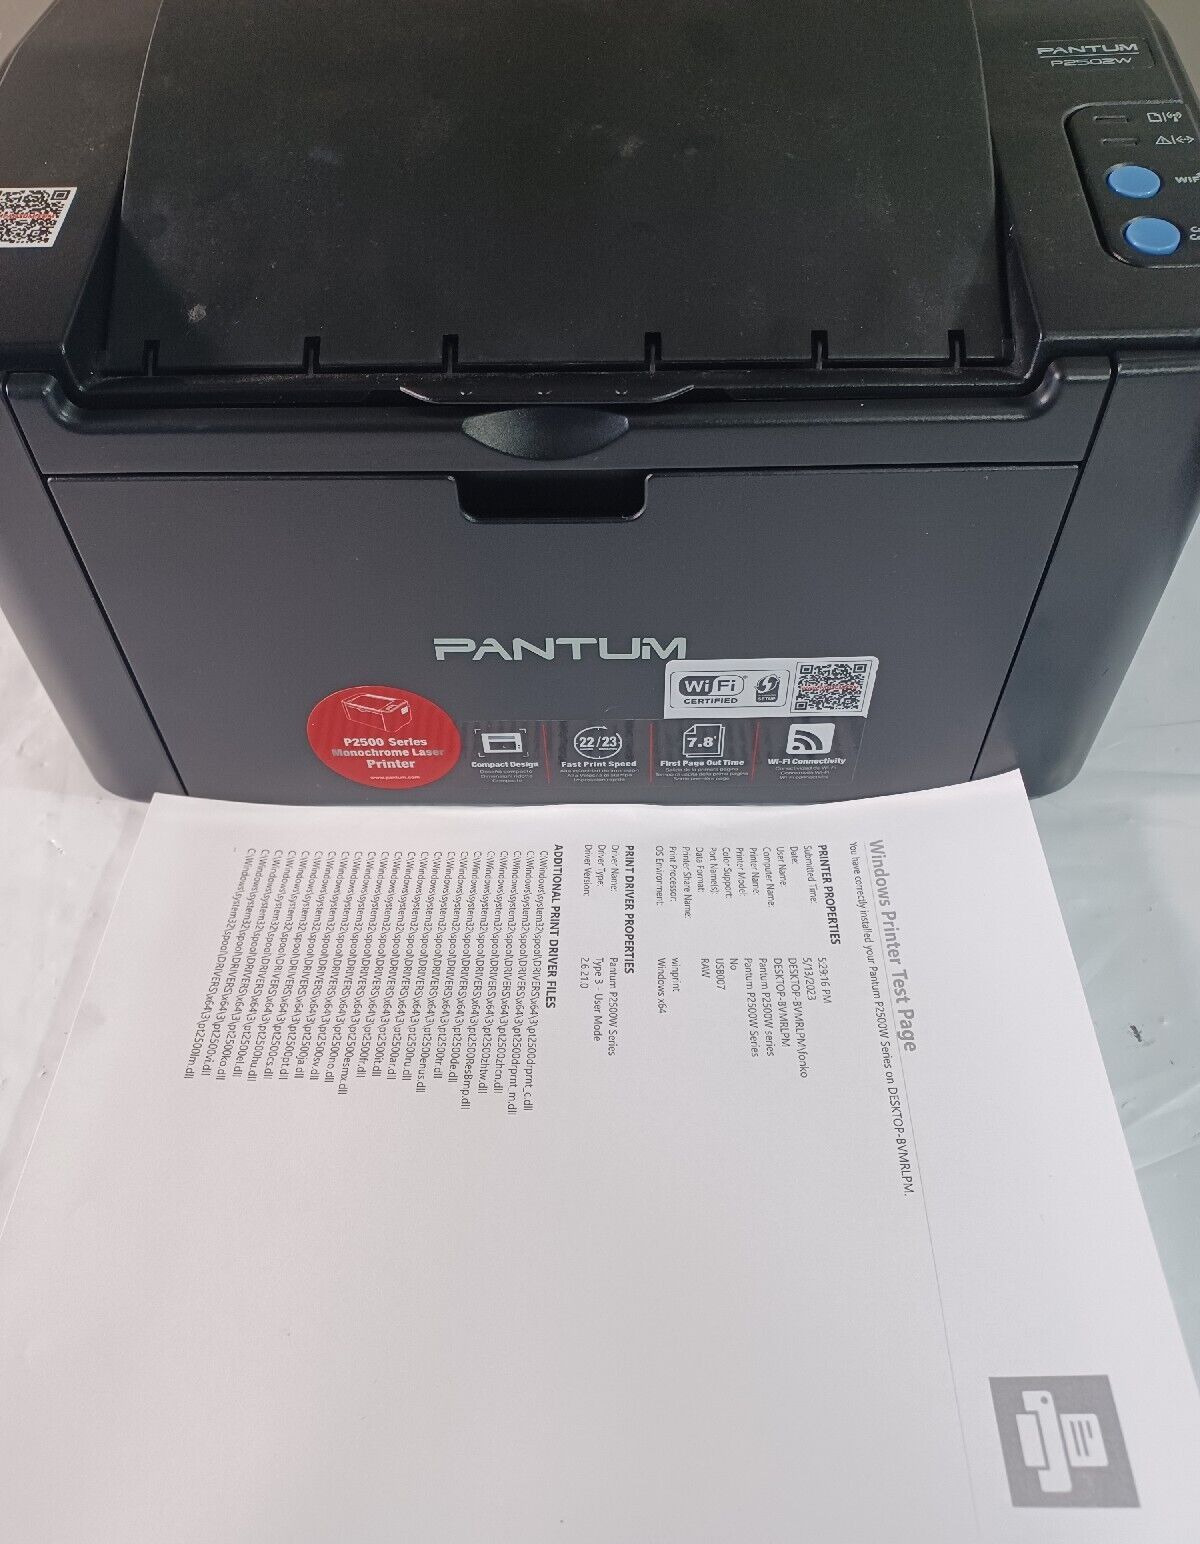 Pantum P2502W Laser Printer Monochrome Wireless Networking Black WiFi Tested